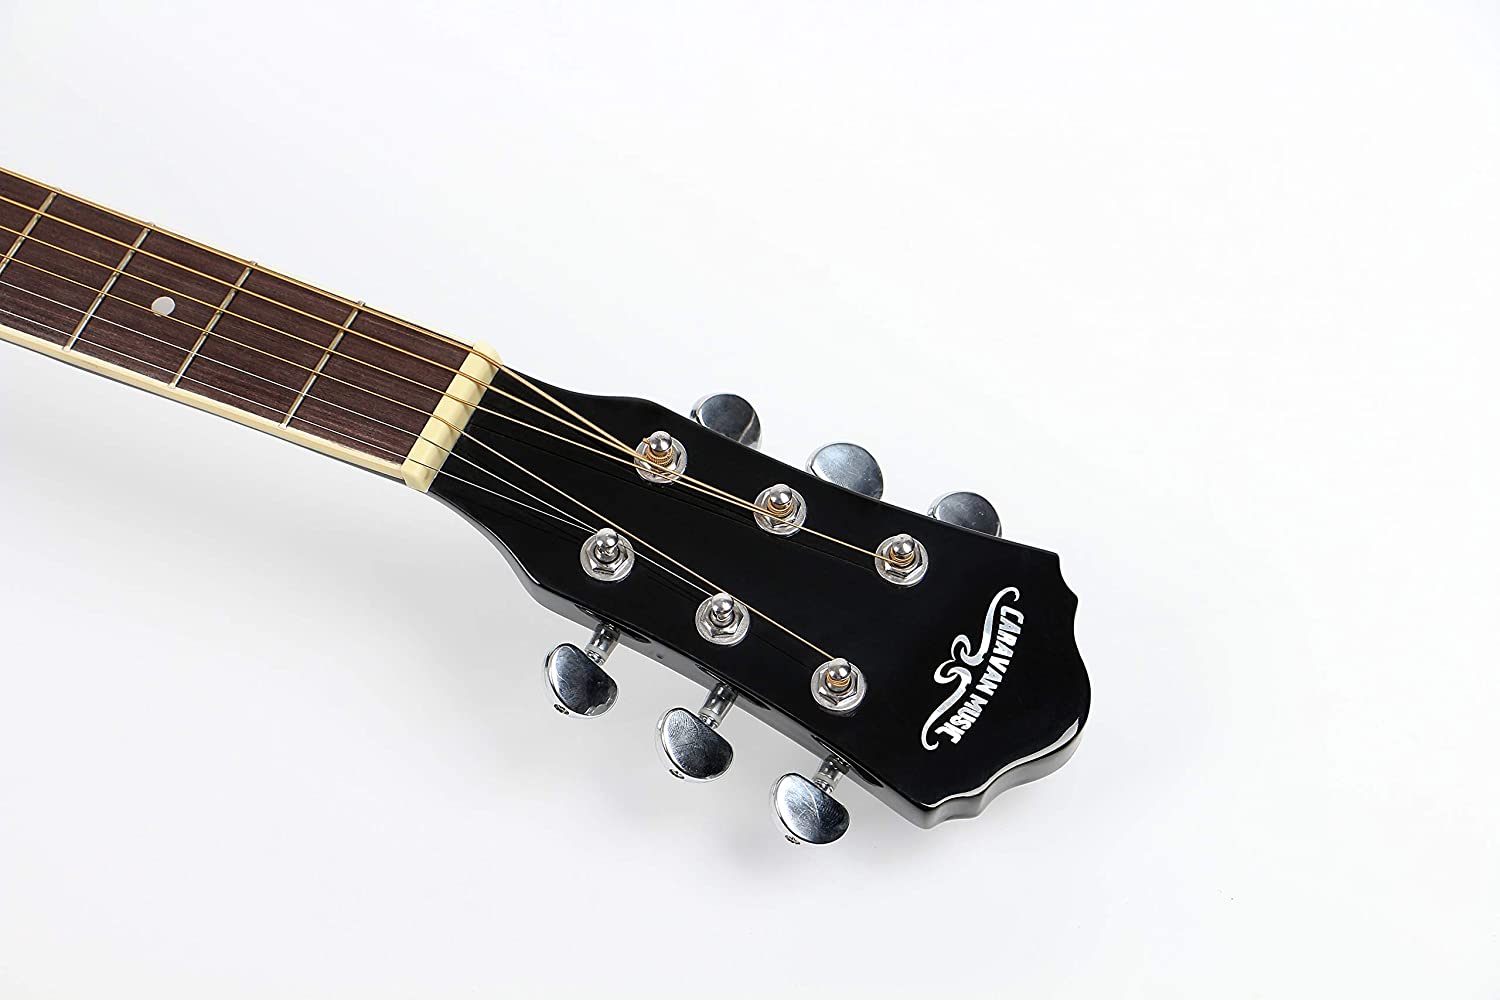 گیتار آکوستیک CARAVAN MUSIC 40 inch Acoustic Guitar in Full Size - ارسال ۱۰ الی ۱۵ روز کاری